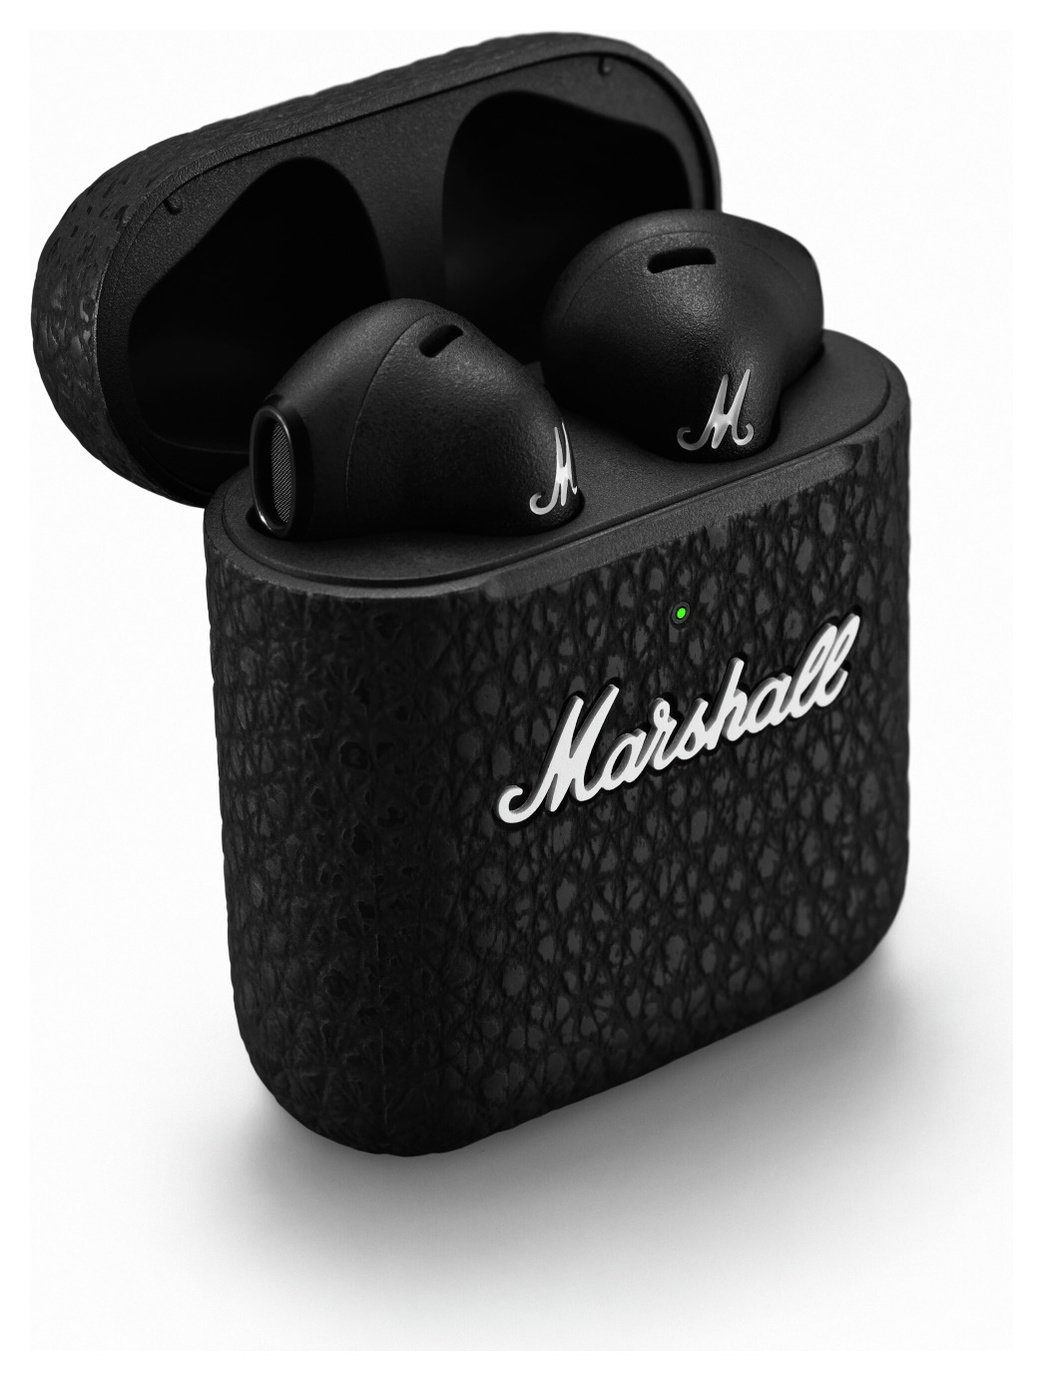 Marshall Minor III Wireless Earbuds - Black